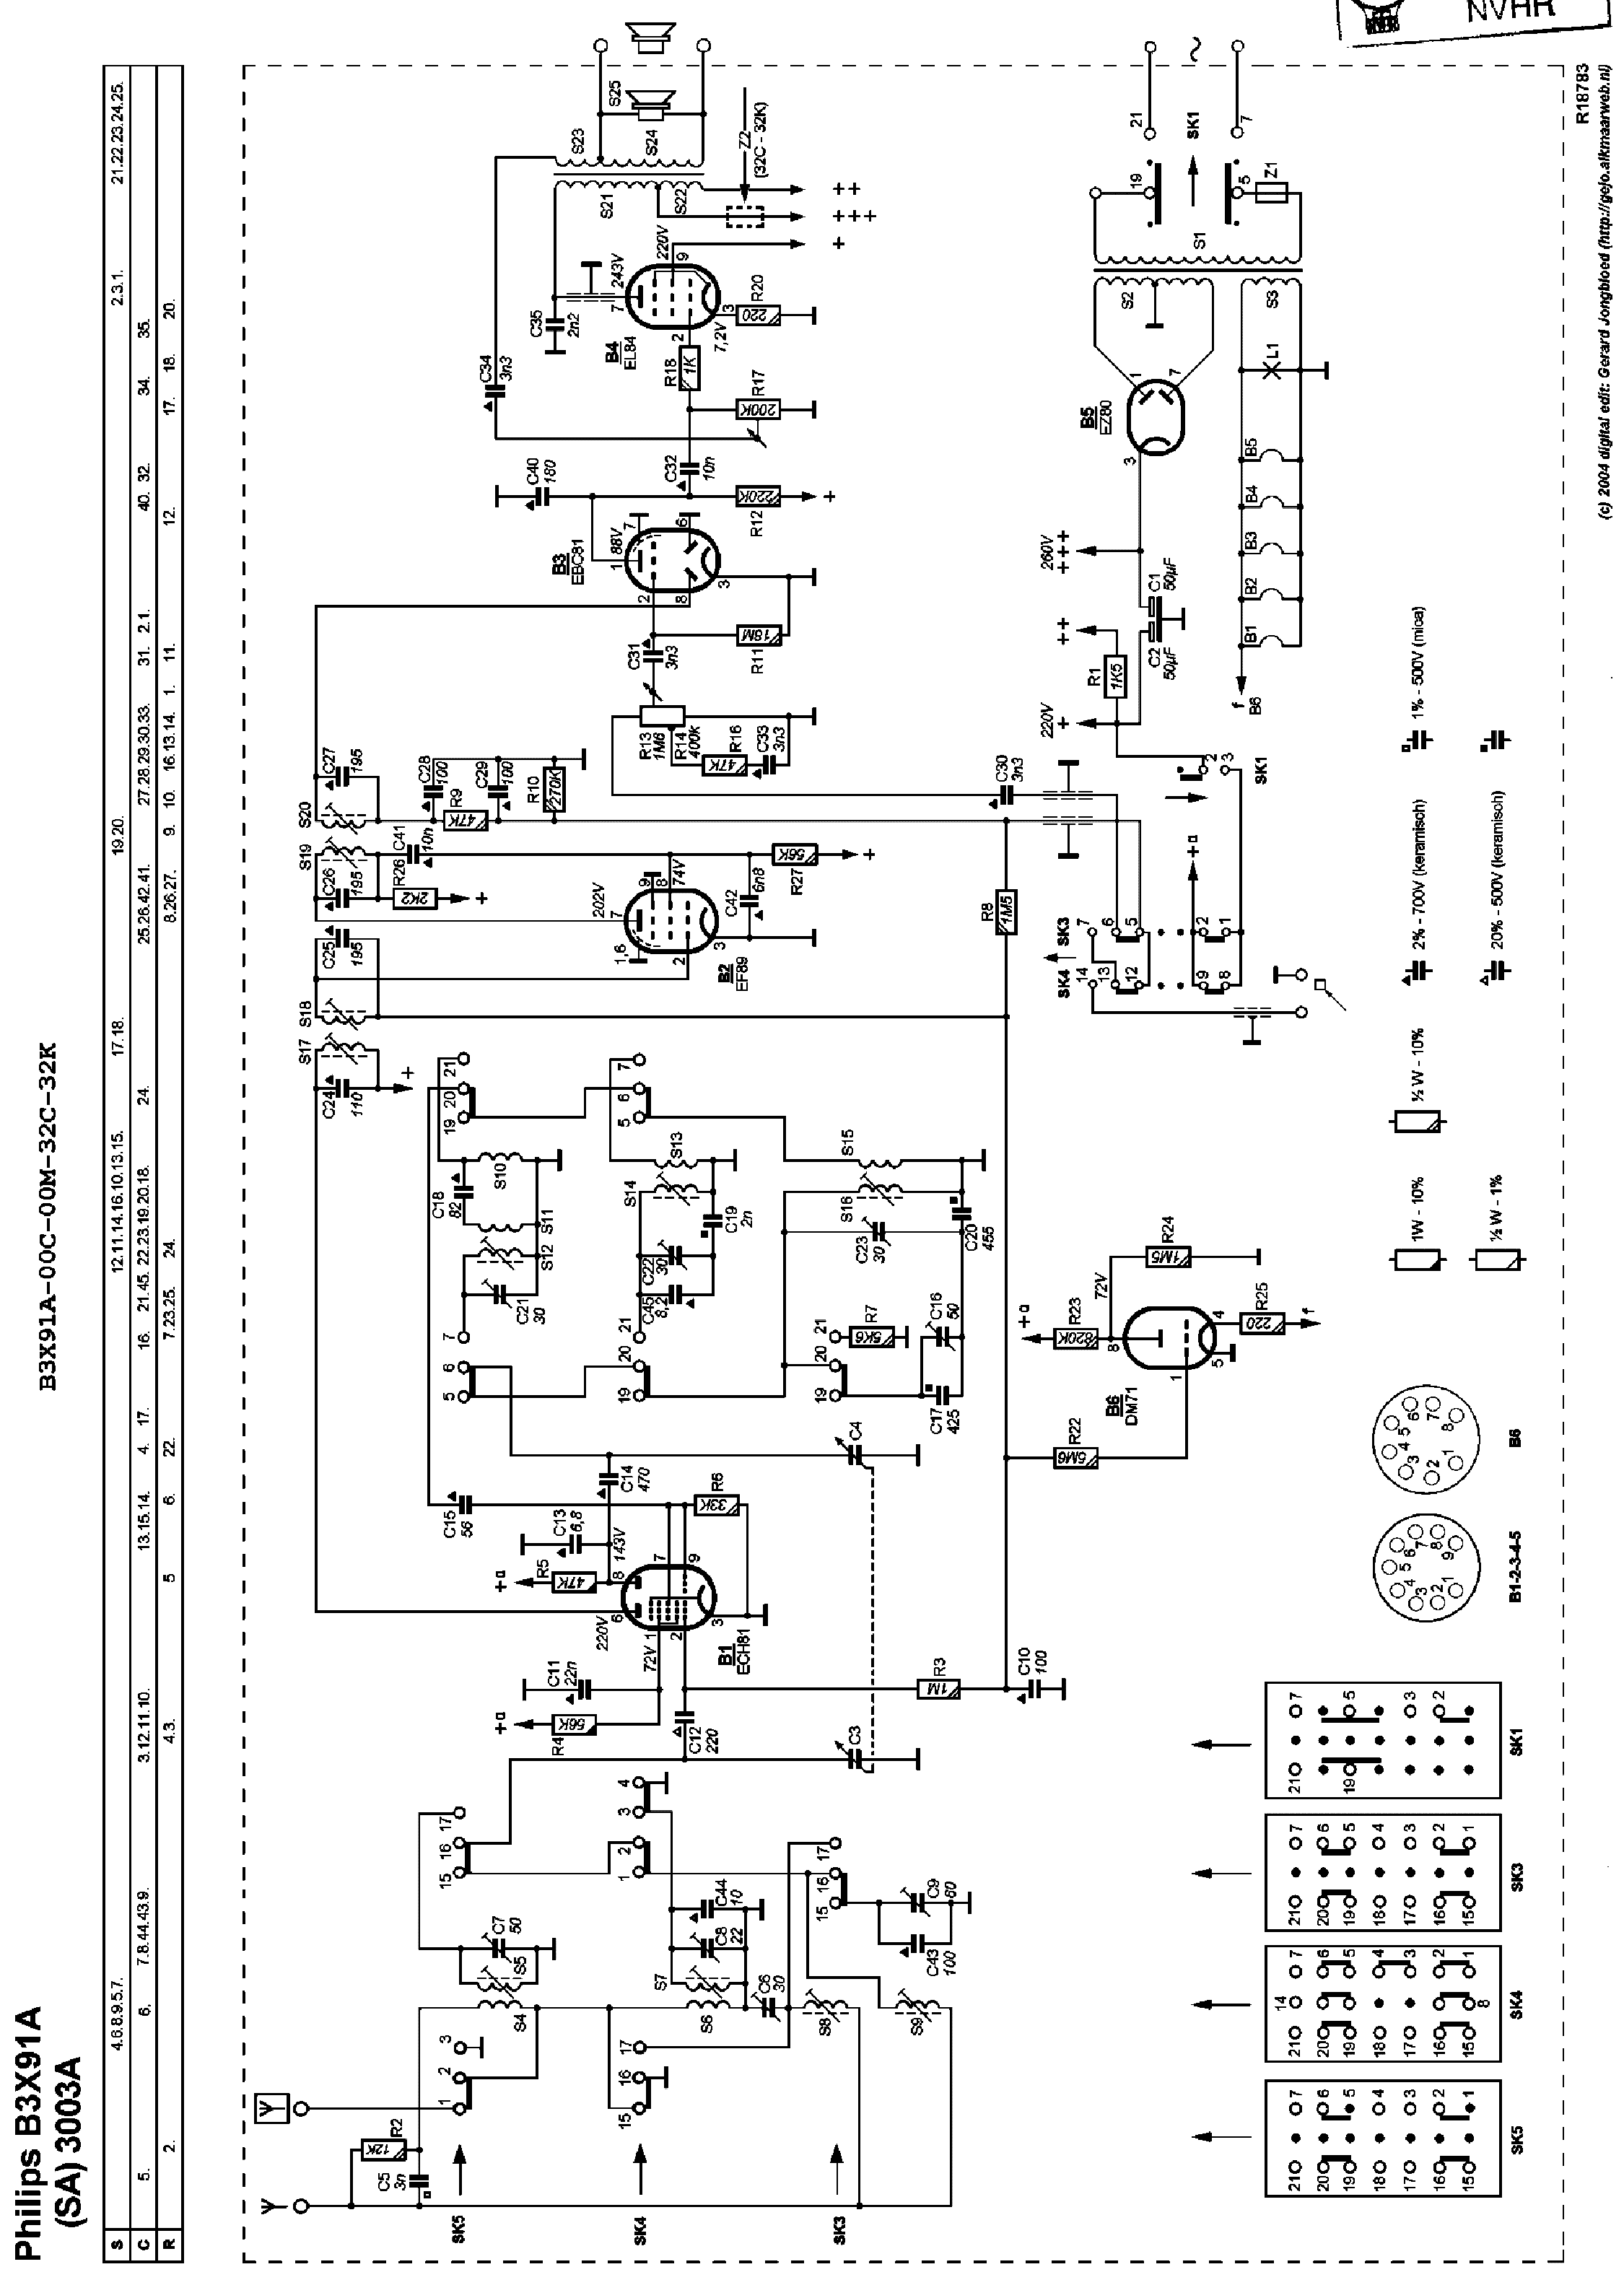 Service Manual-Anleitung für Philips N 4511 